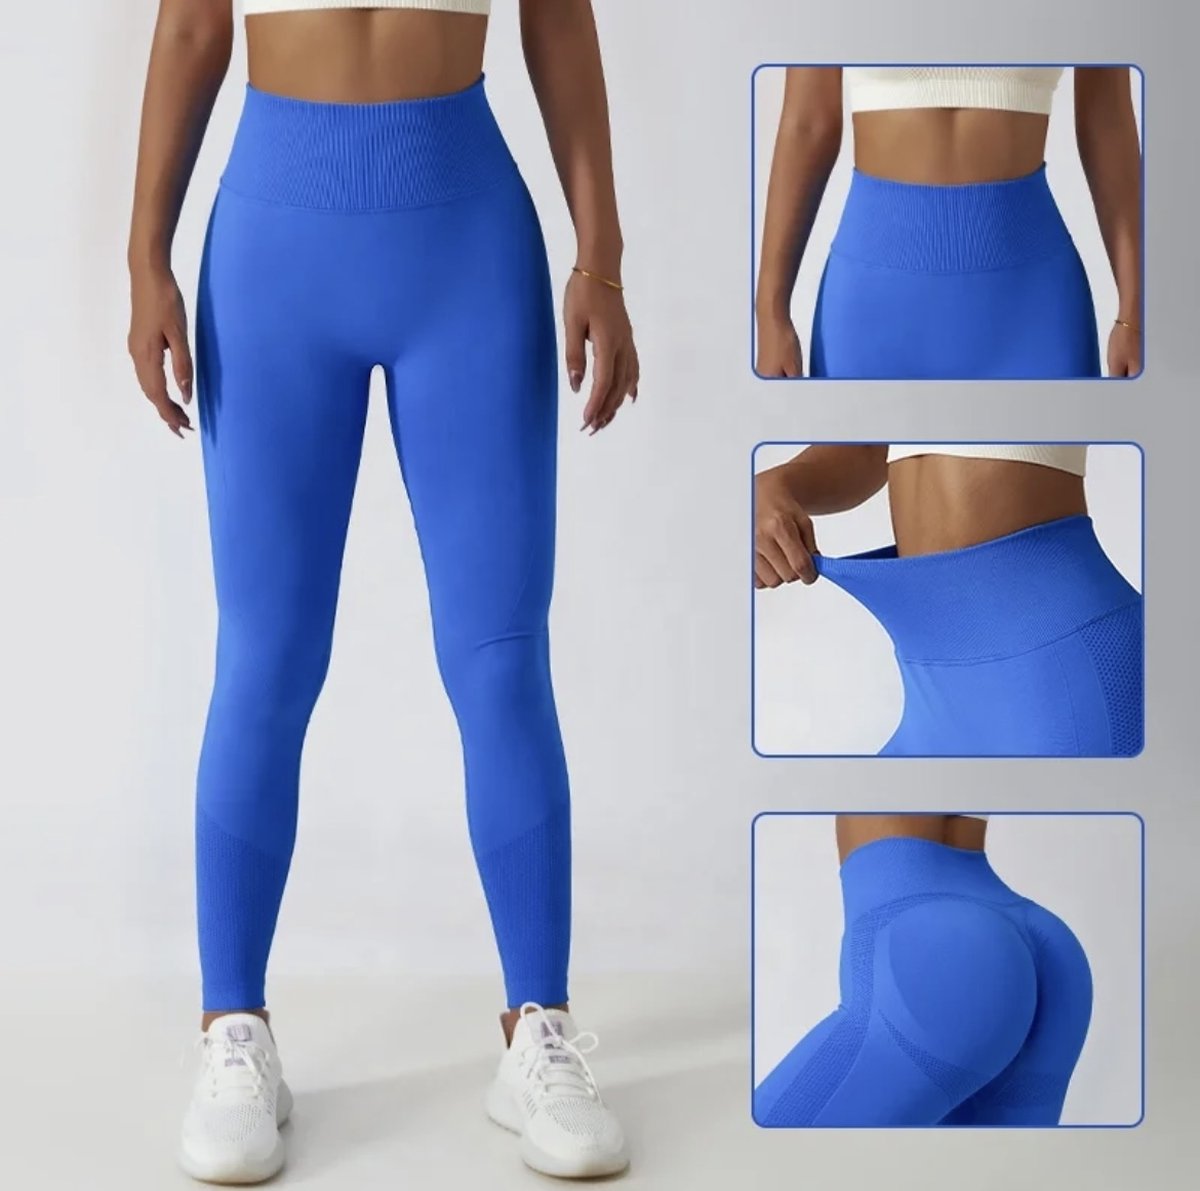 SPRING GYM LEGGING - Maat M - Blauw - Koningsblauw - Fitness legging - Sportlegging - Sportkleding - Yogalegging - Hardlooplegging